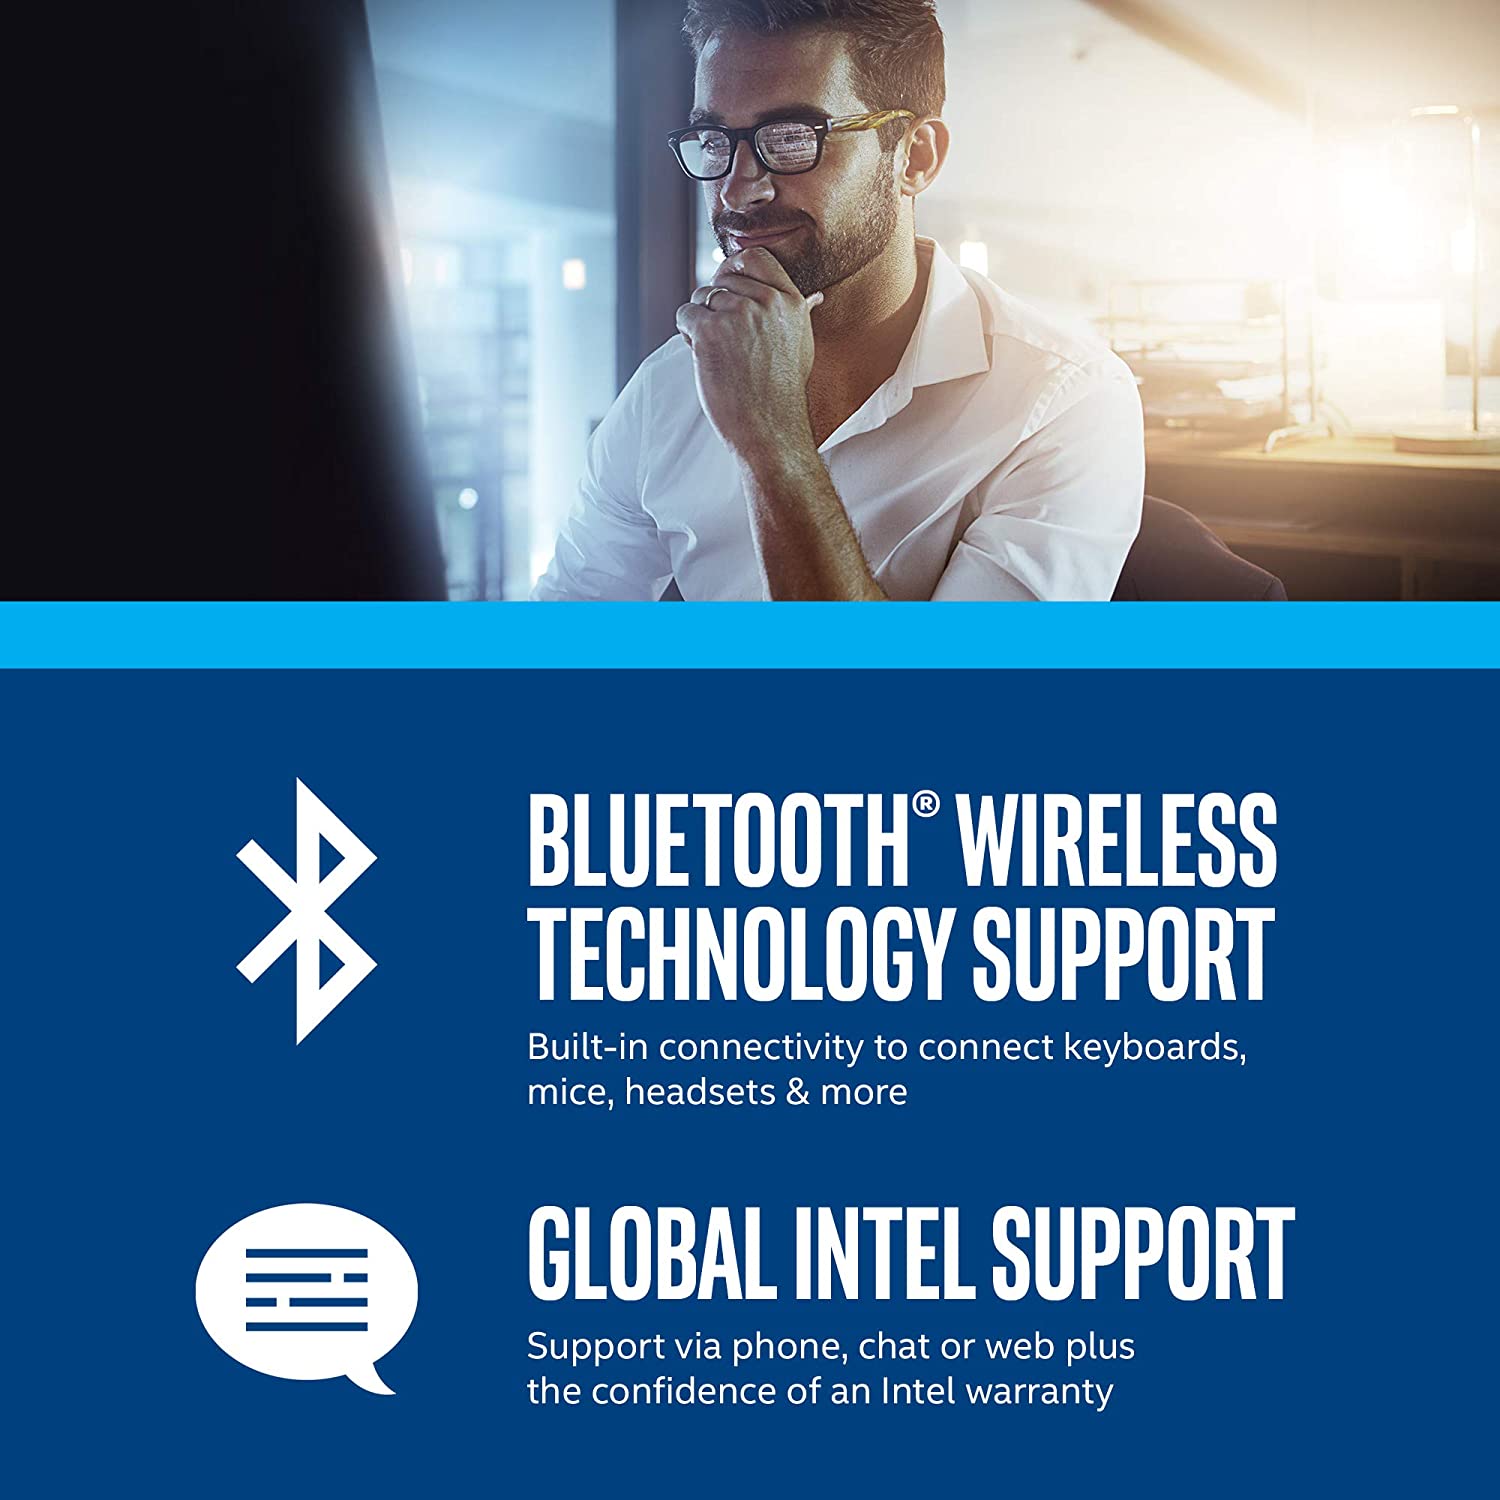 Intel Dual Band Wireless AX200 (GIG+) Network Adapter with Bluetooth 5.0 Desktop Wireless M.2 2230 Kit